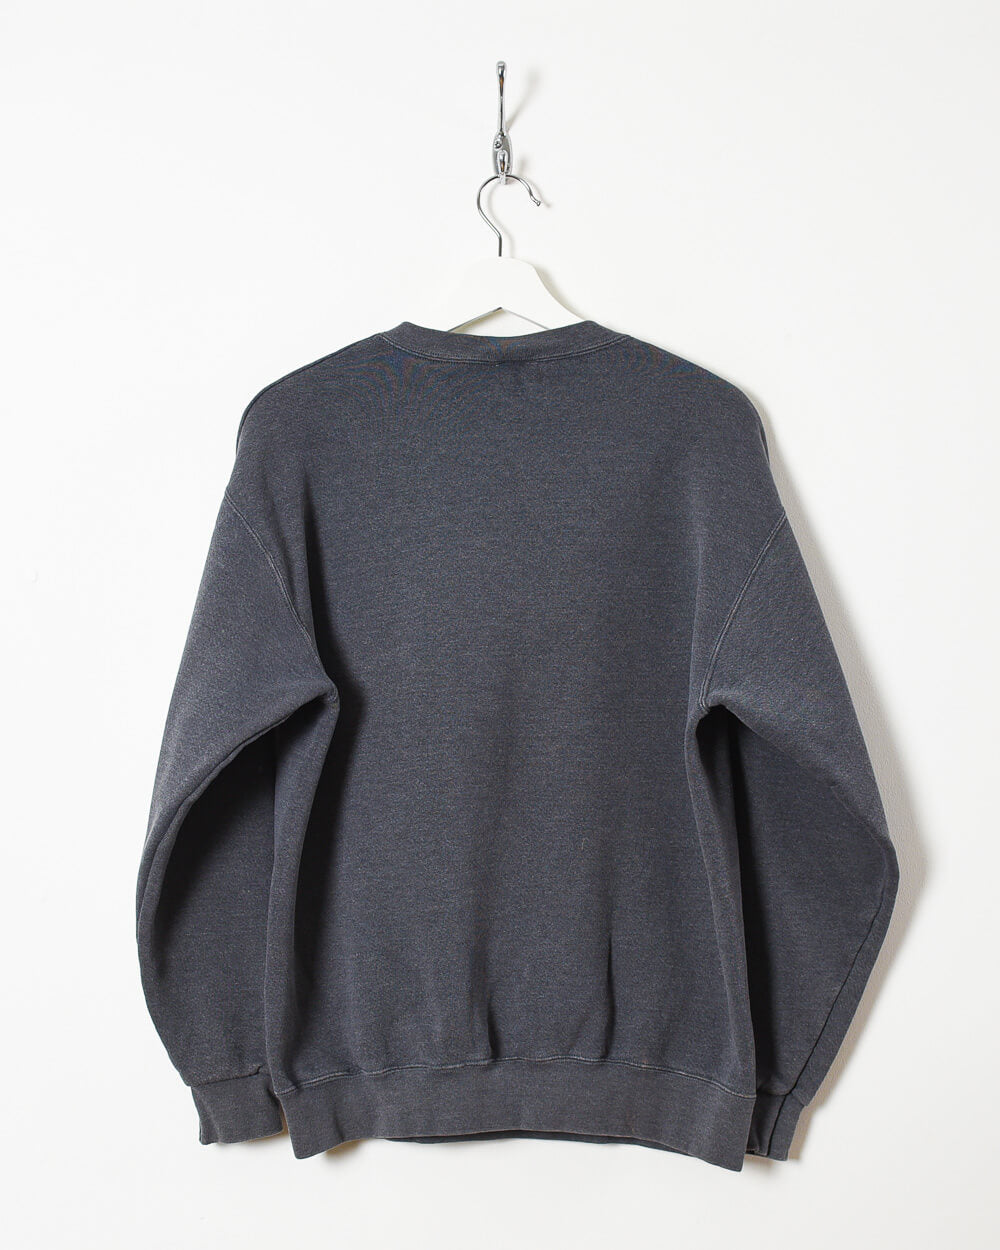 Grey Jansport Universoty of New Mexico Sweatshirt - Medium